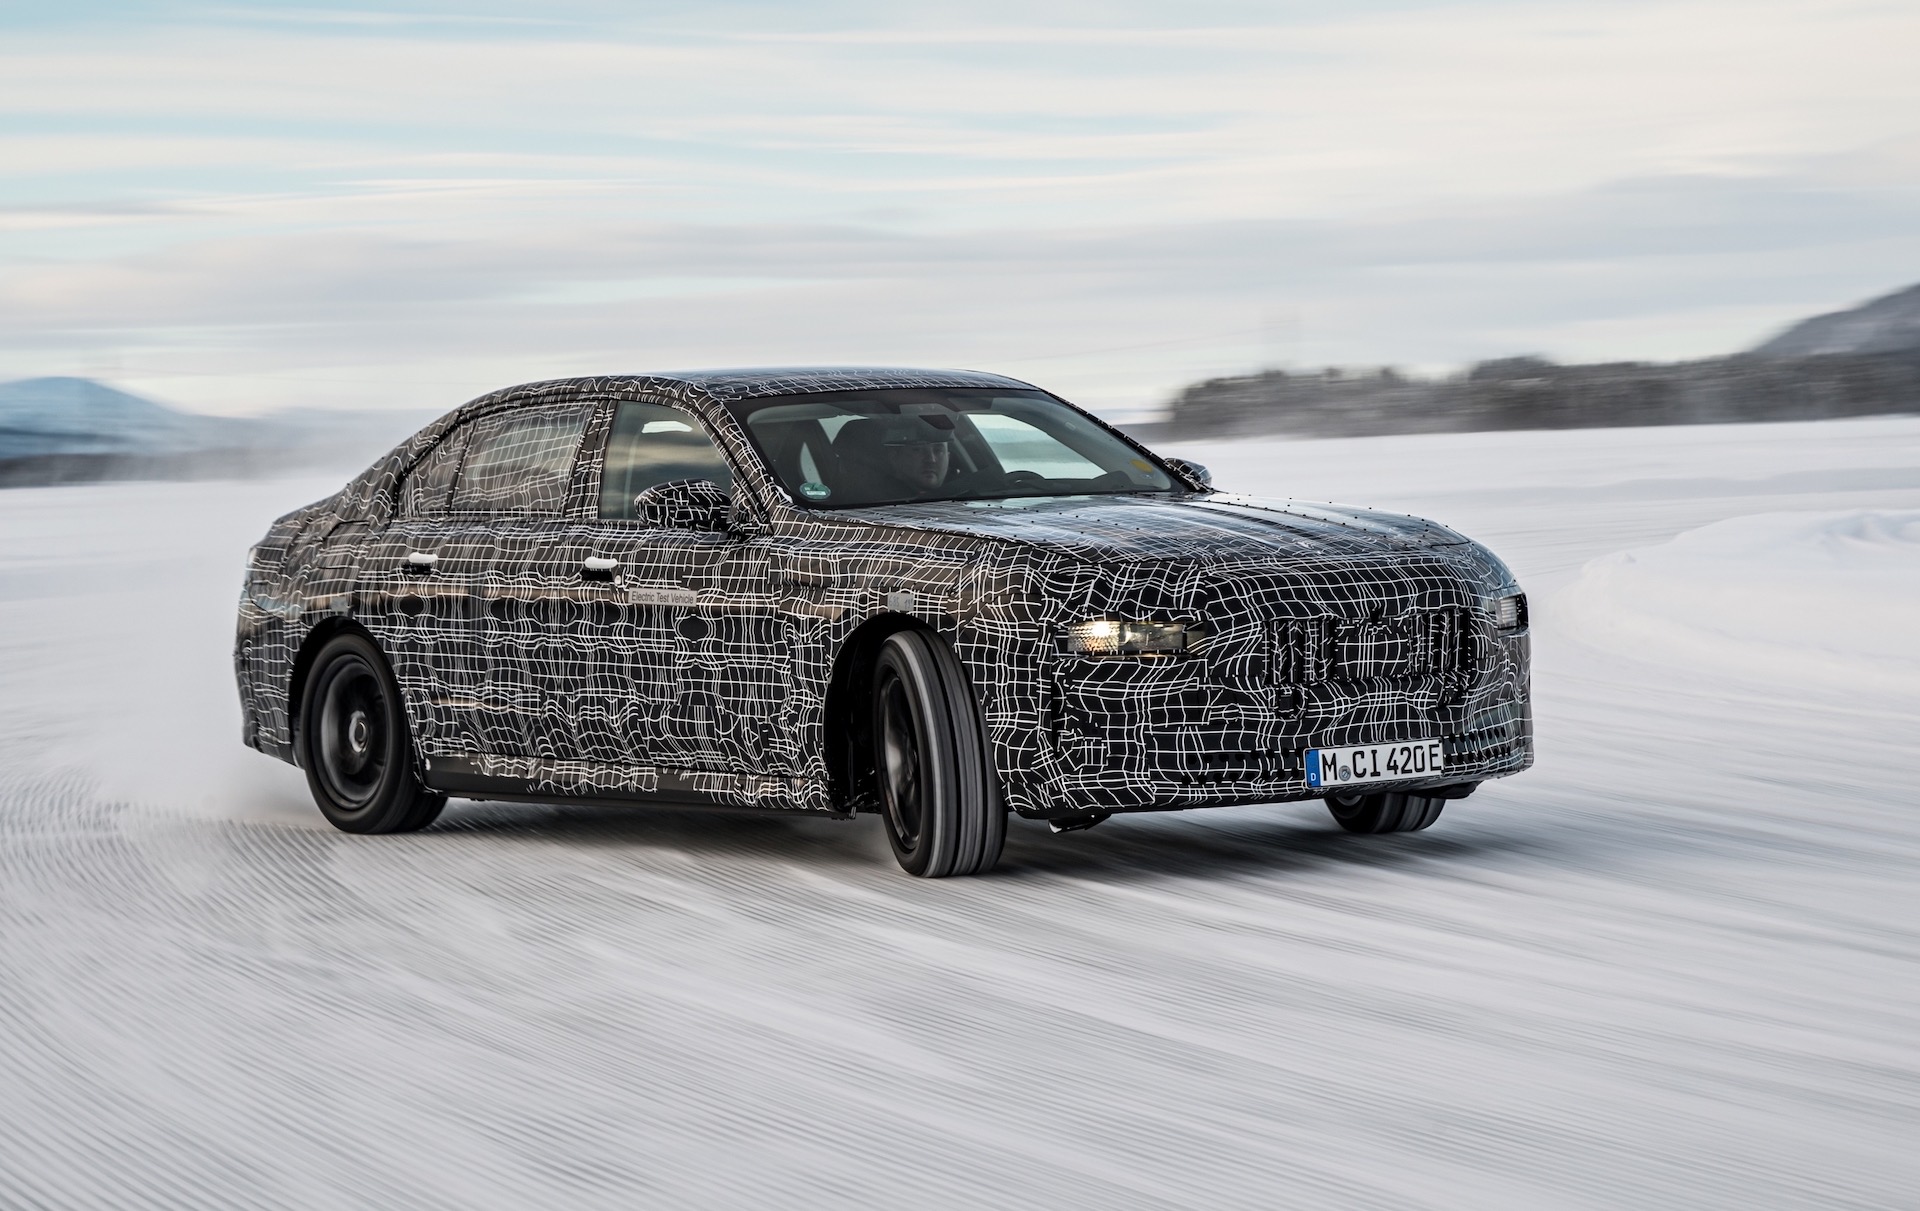 BMW i7 electric sedan goes winter testing, arrives 2022